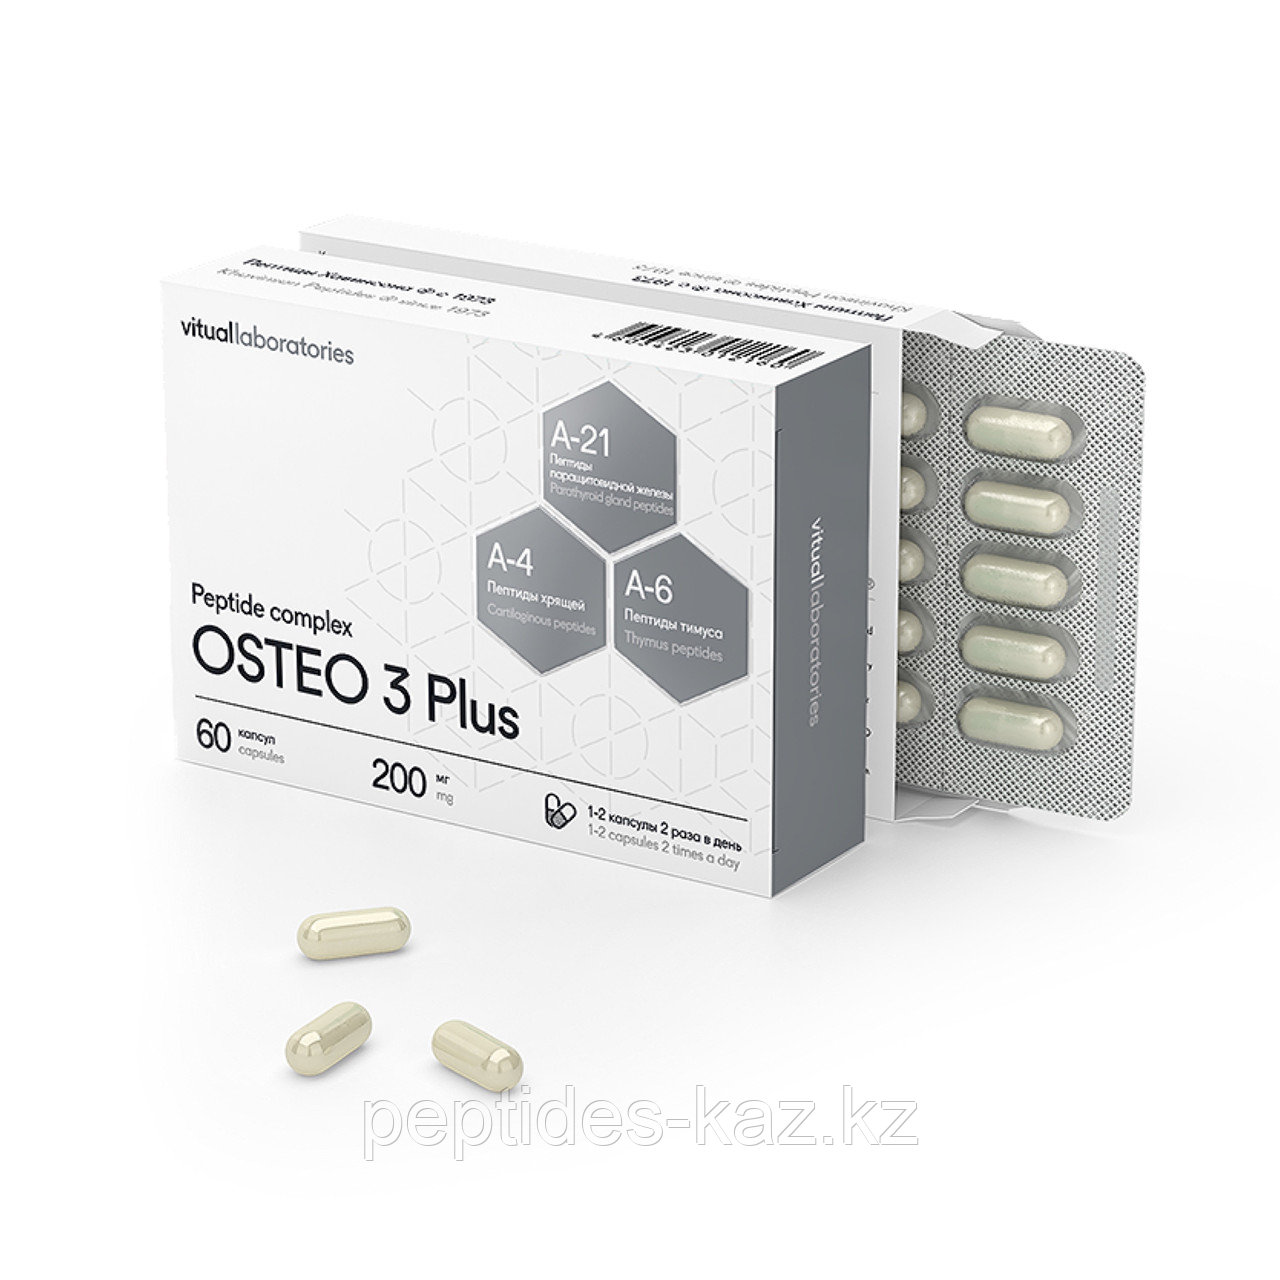 OSTEO 3 Plus® №60, крепкие кости